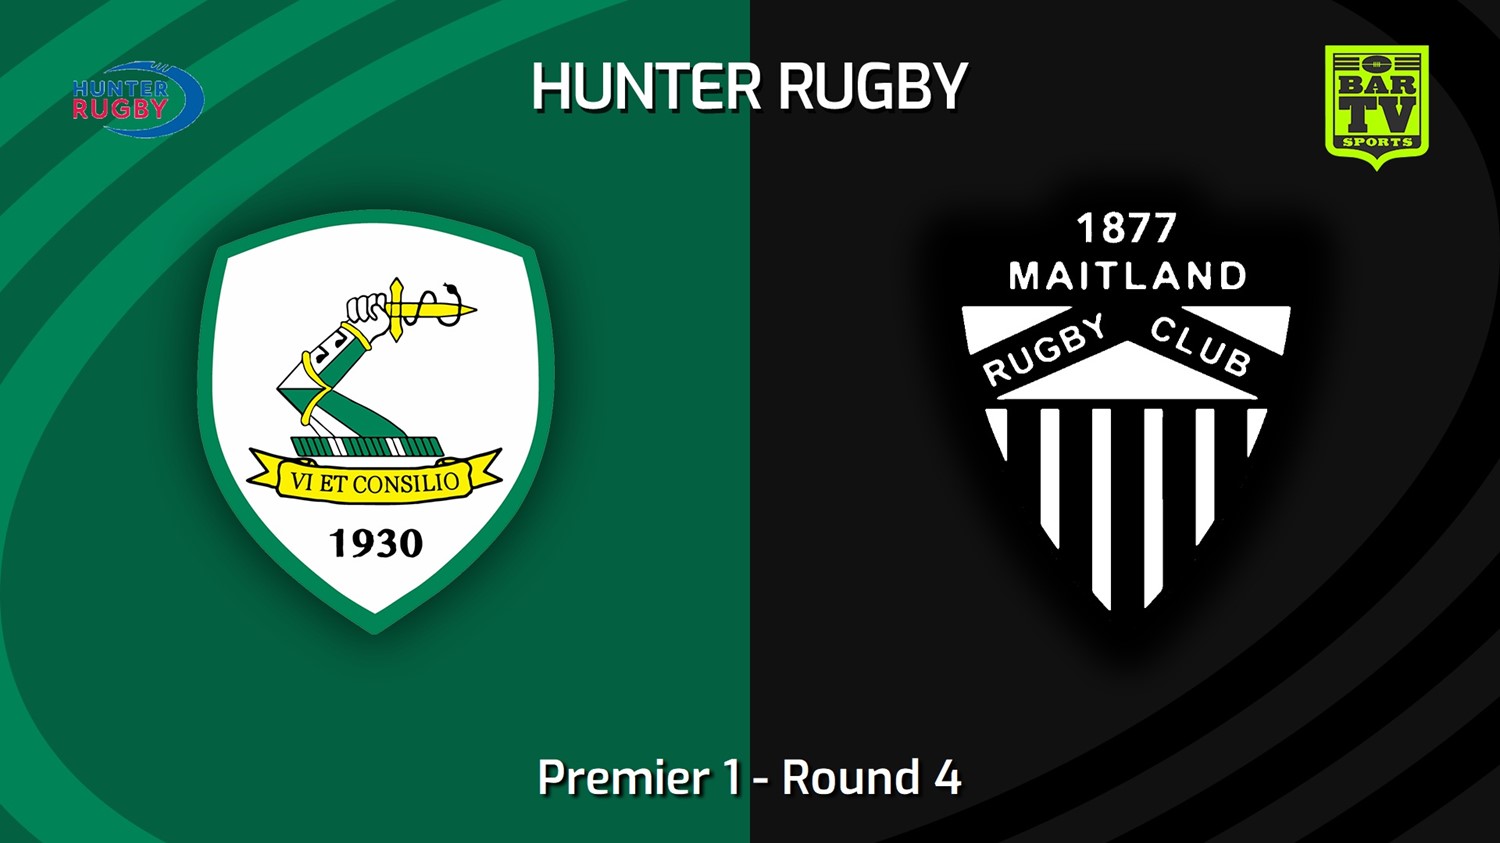 230506-Hunter Rugby Round 4 - Premier 1 - Merewether Carlton v Maitland Minigame Slate Image